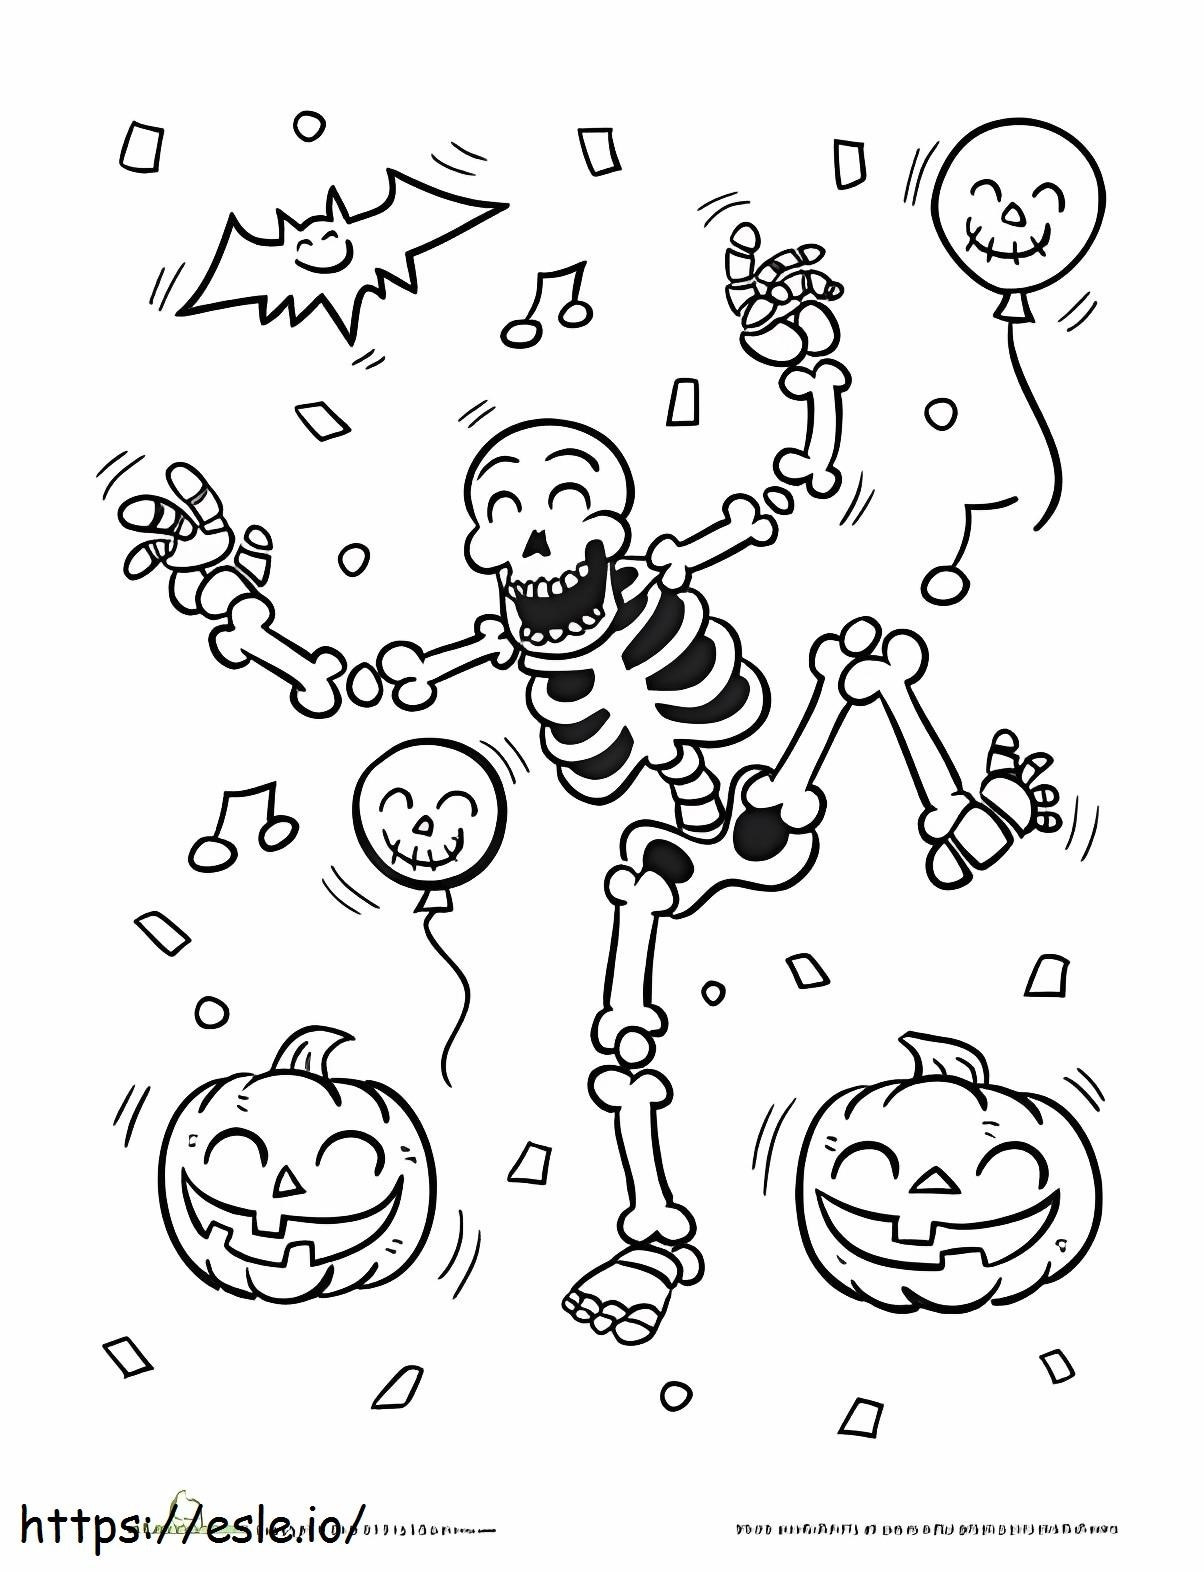  Skeleton Holiday First de colorat